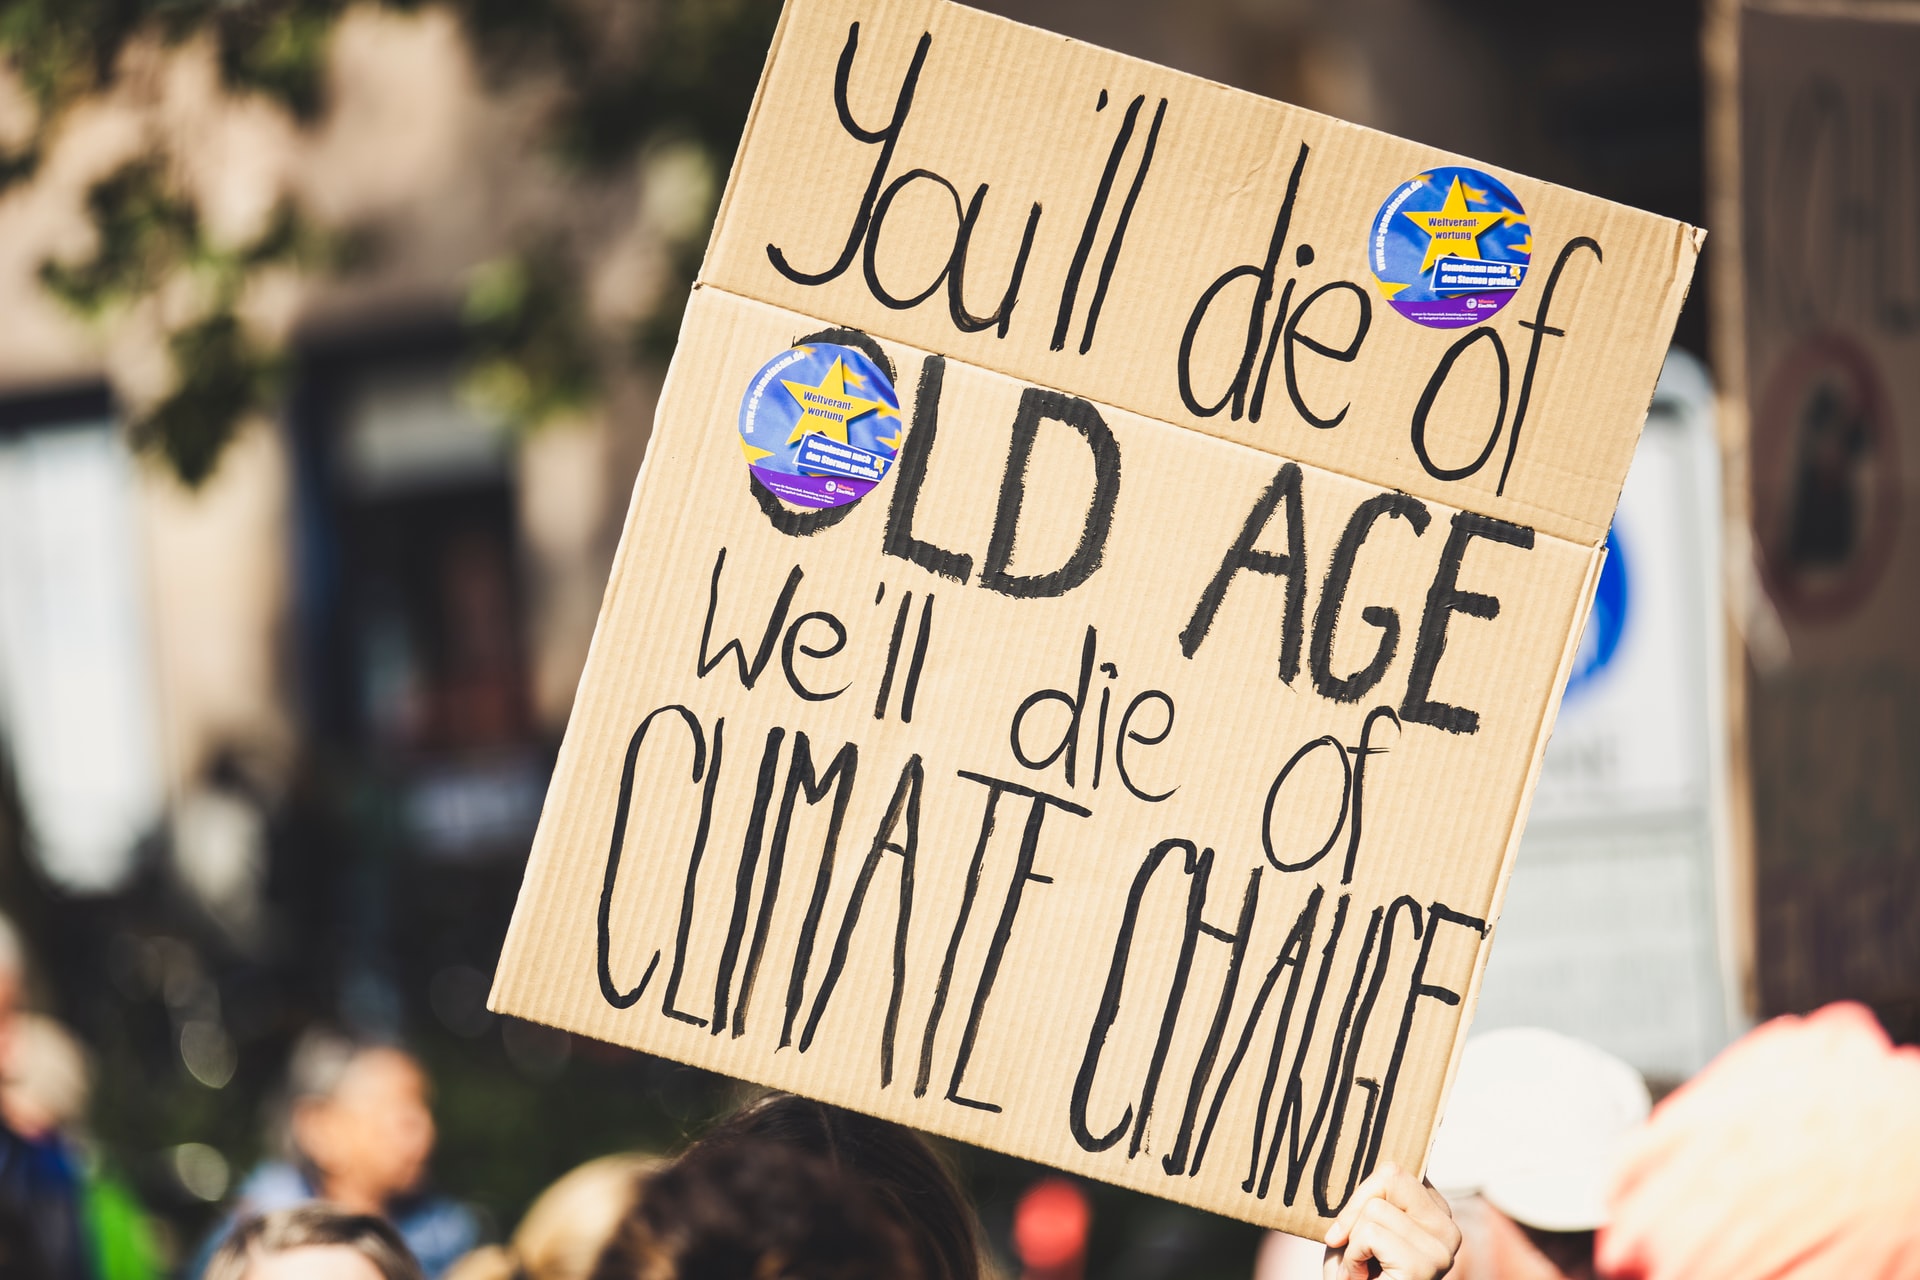 climate change generation gap